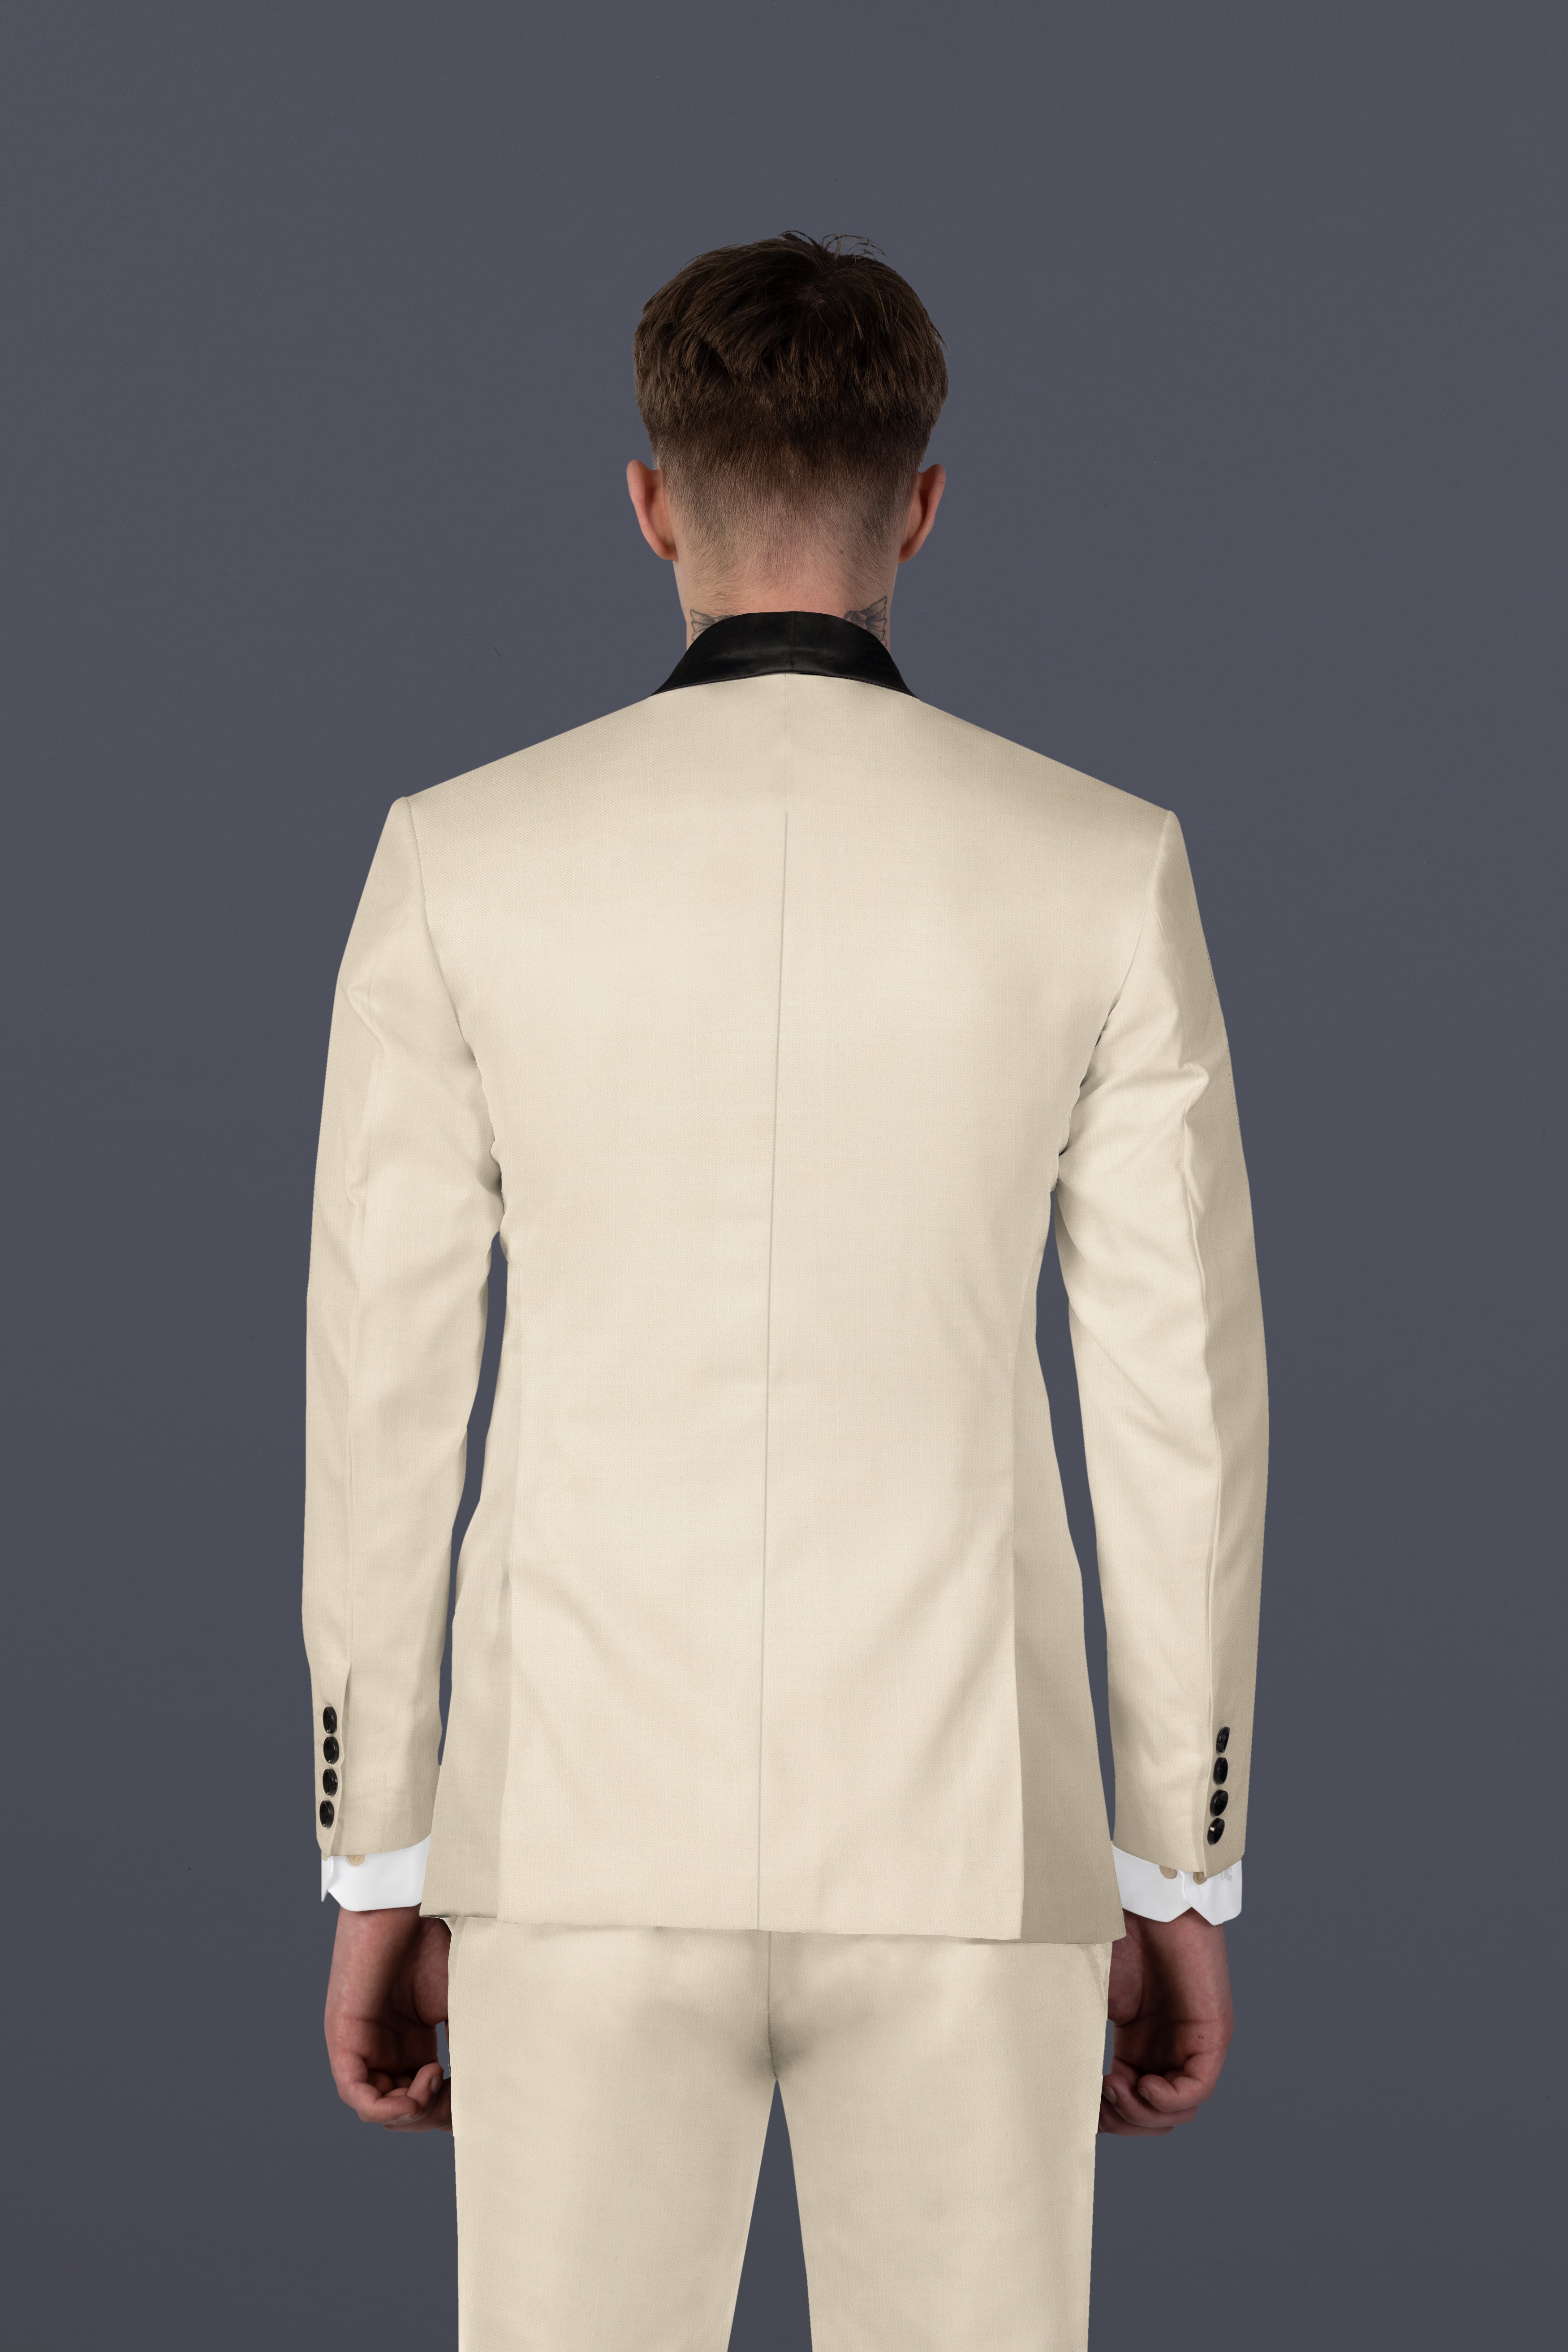 Moon Mist Cream Solid Wool Blend Tuxedo Suit